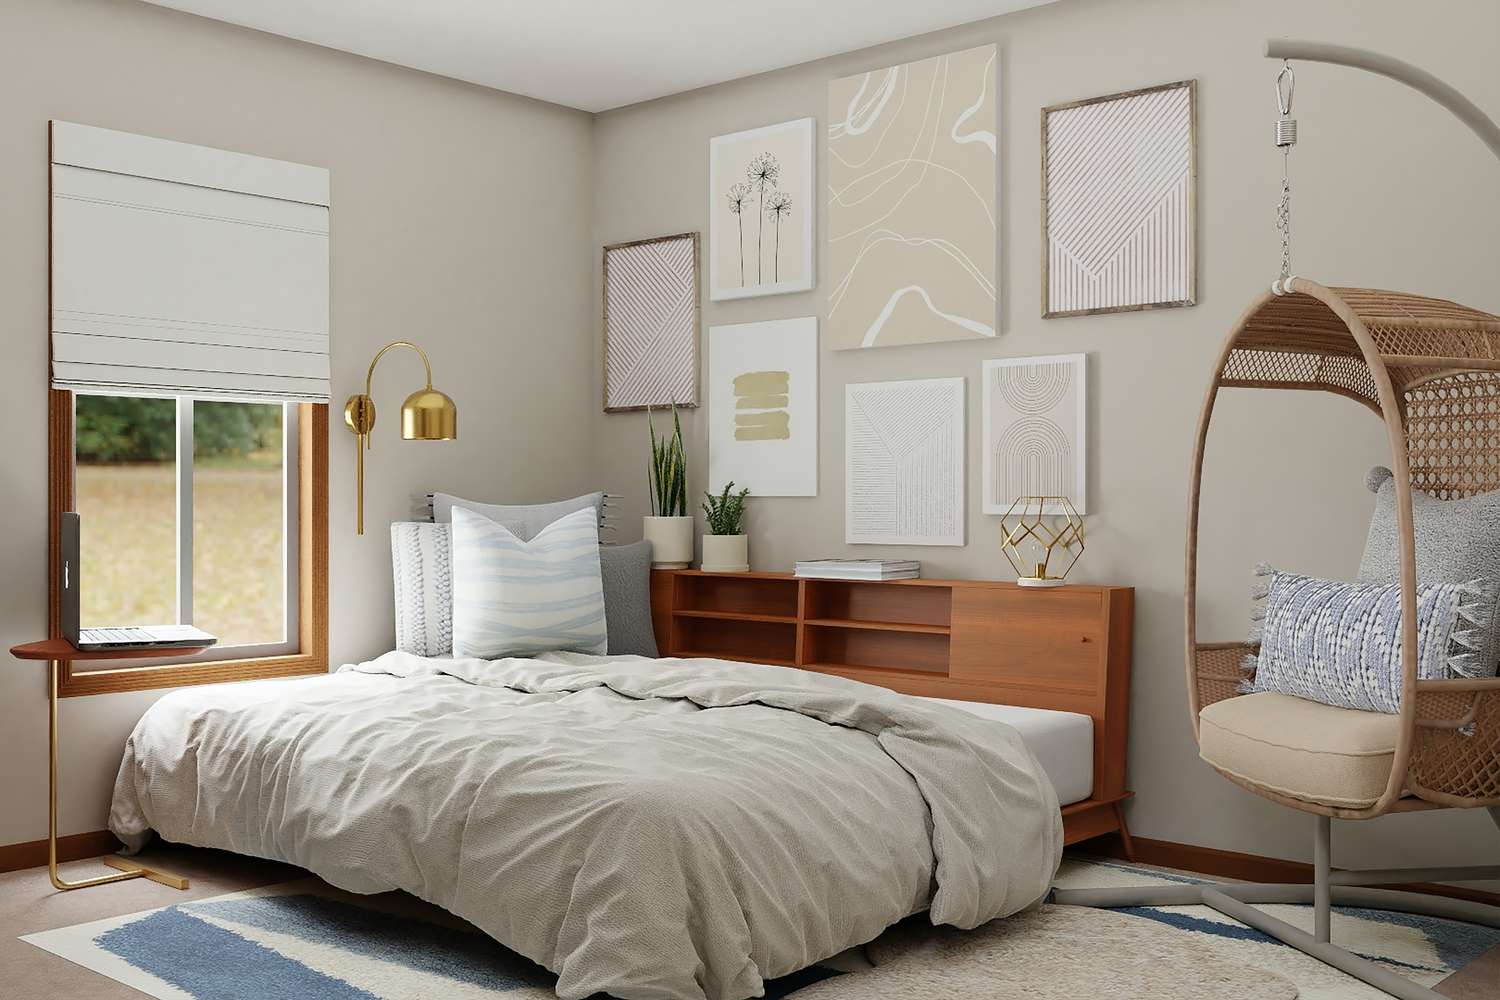 Airy bedroom decor with corner nook